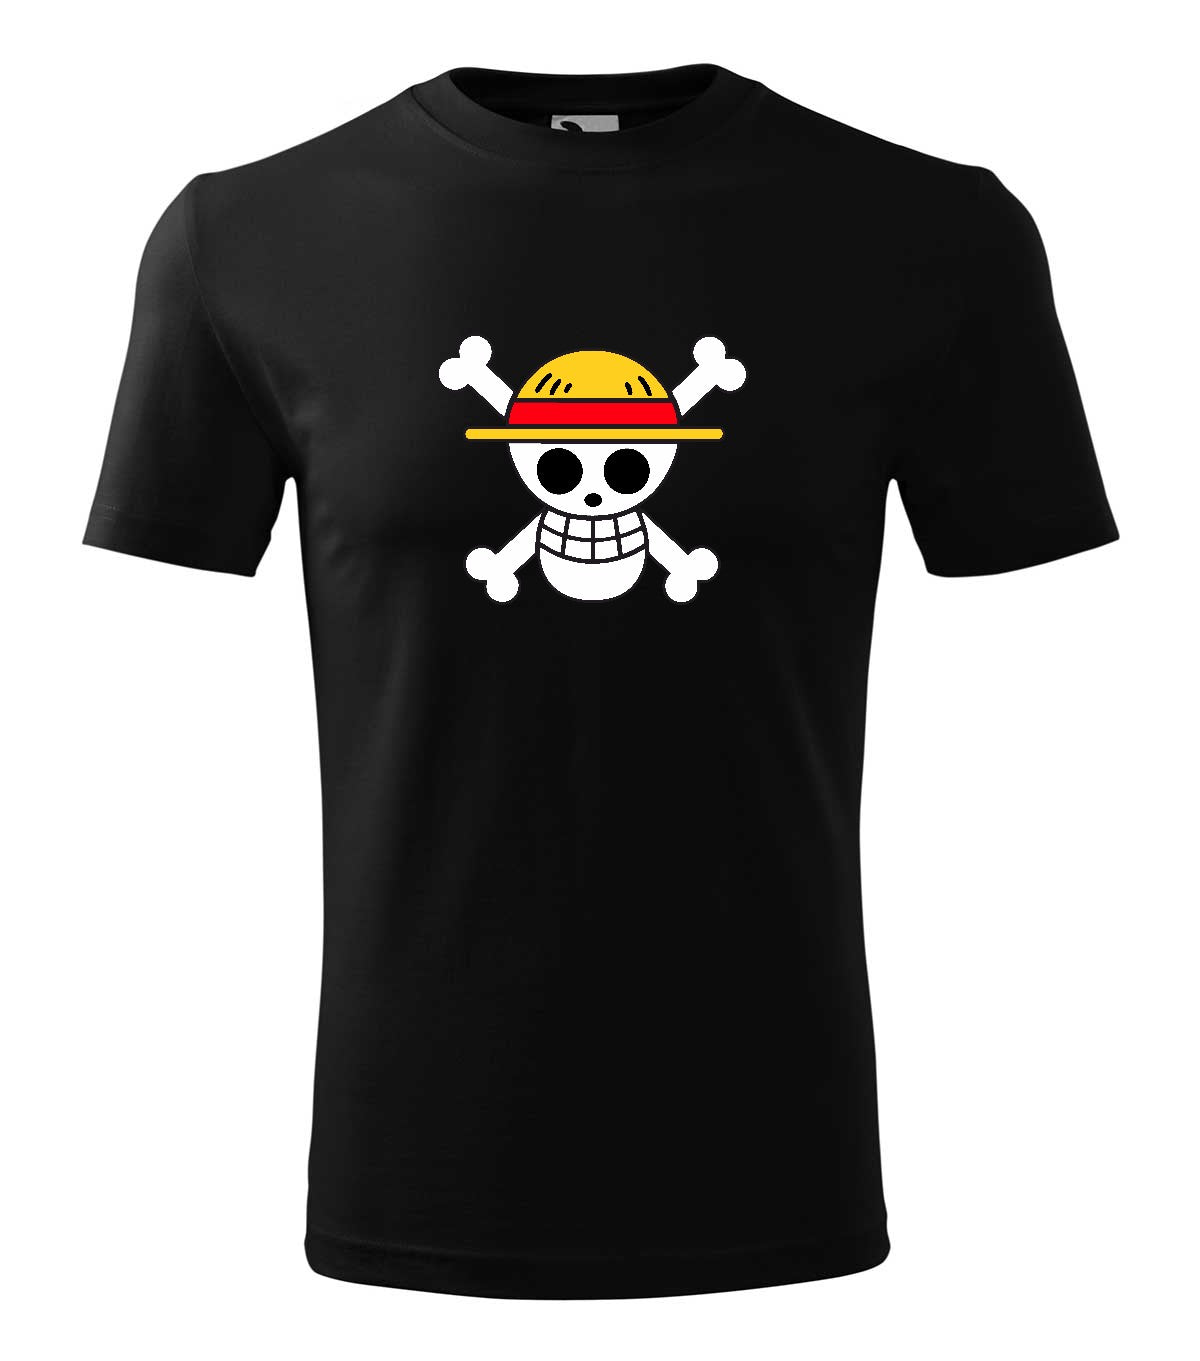 One Piece Logo férfi technikai póló